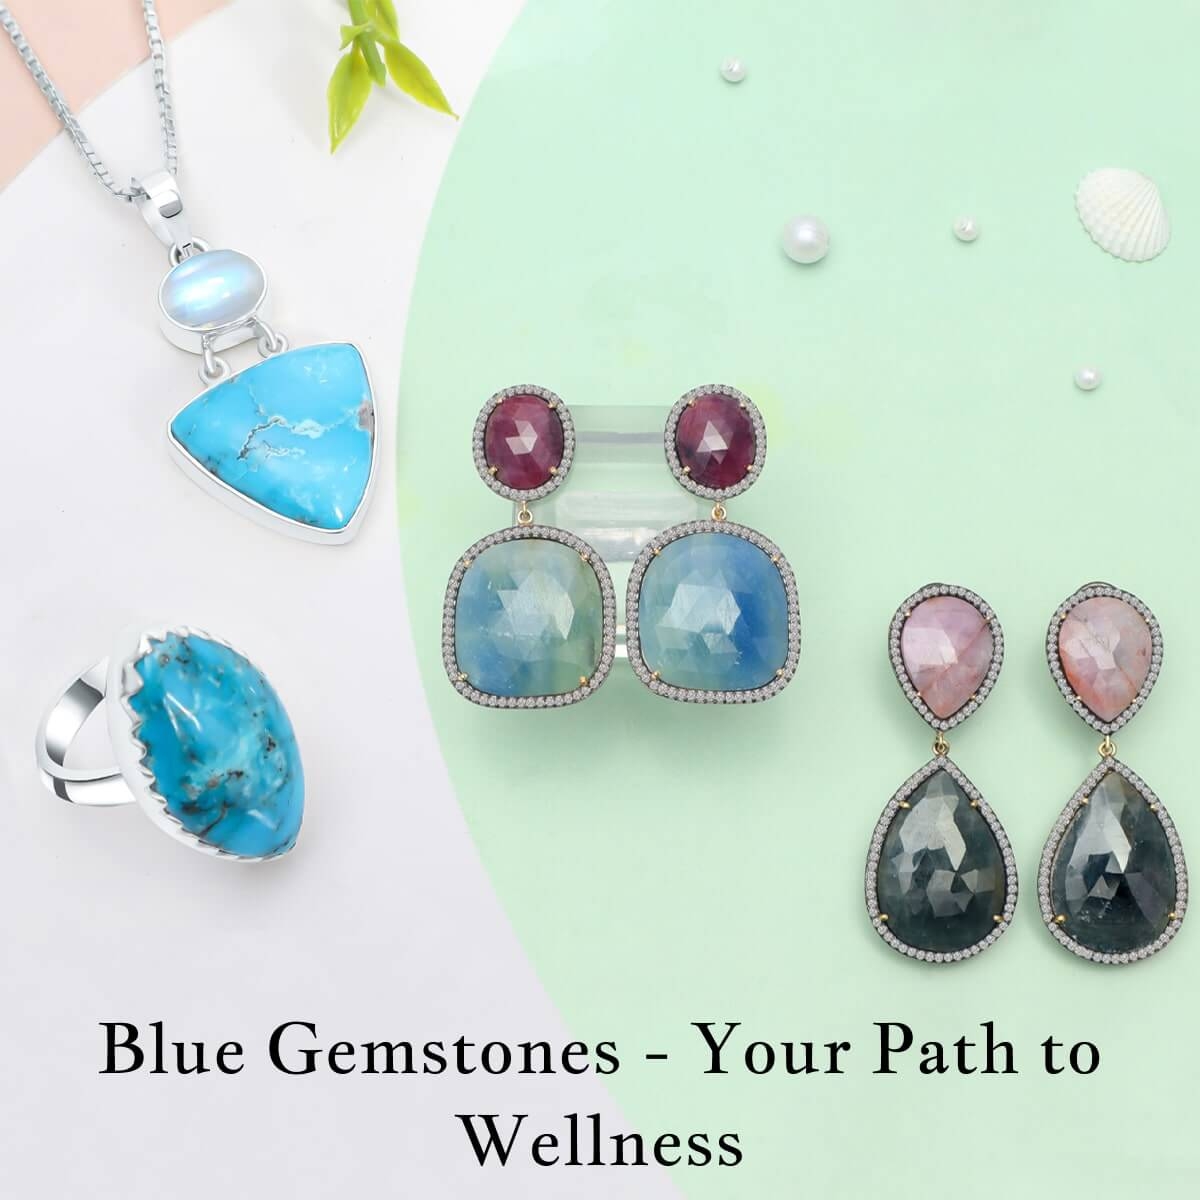 Benefits of wearing Blue Gemstone